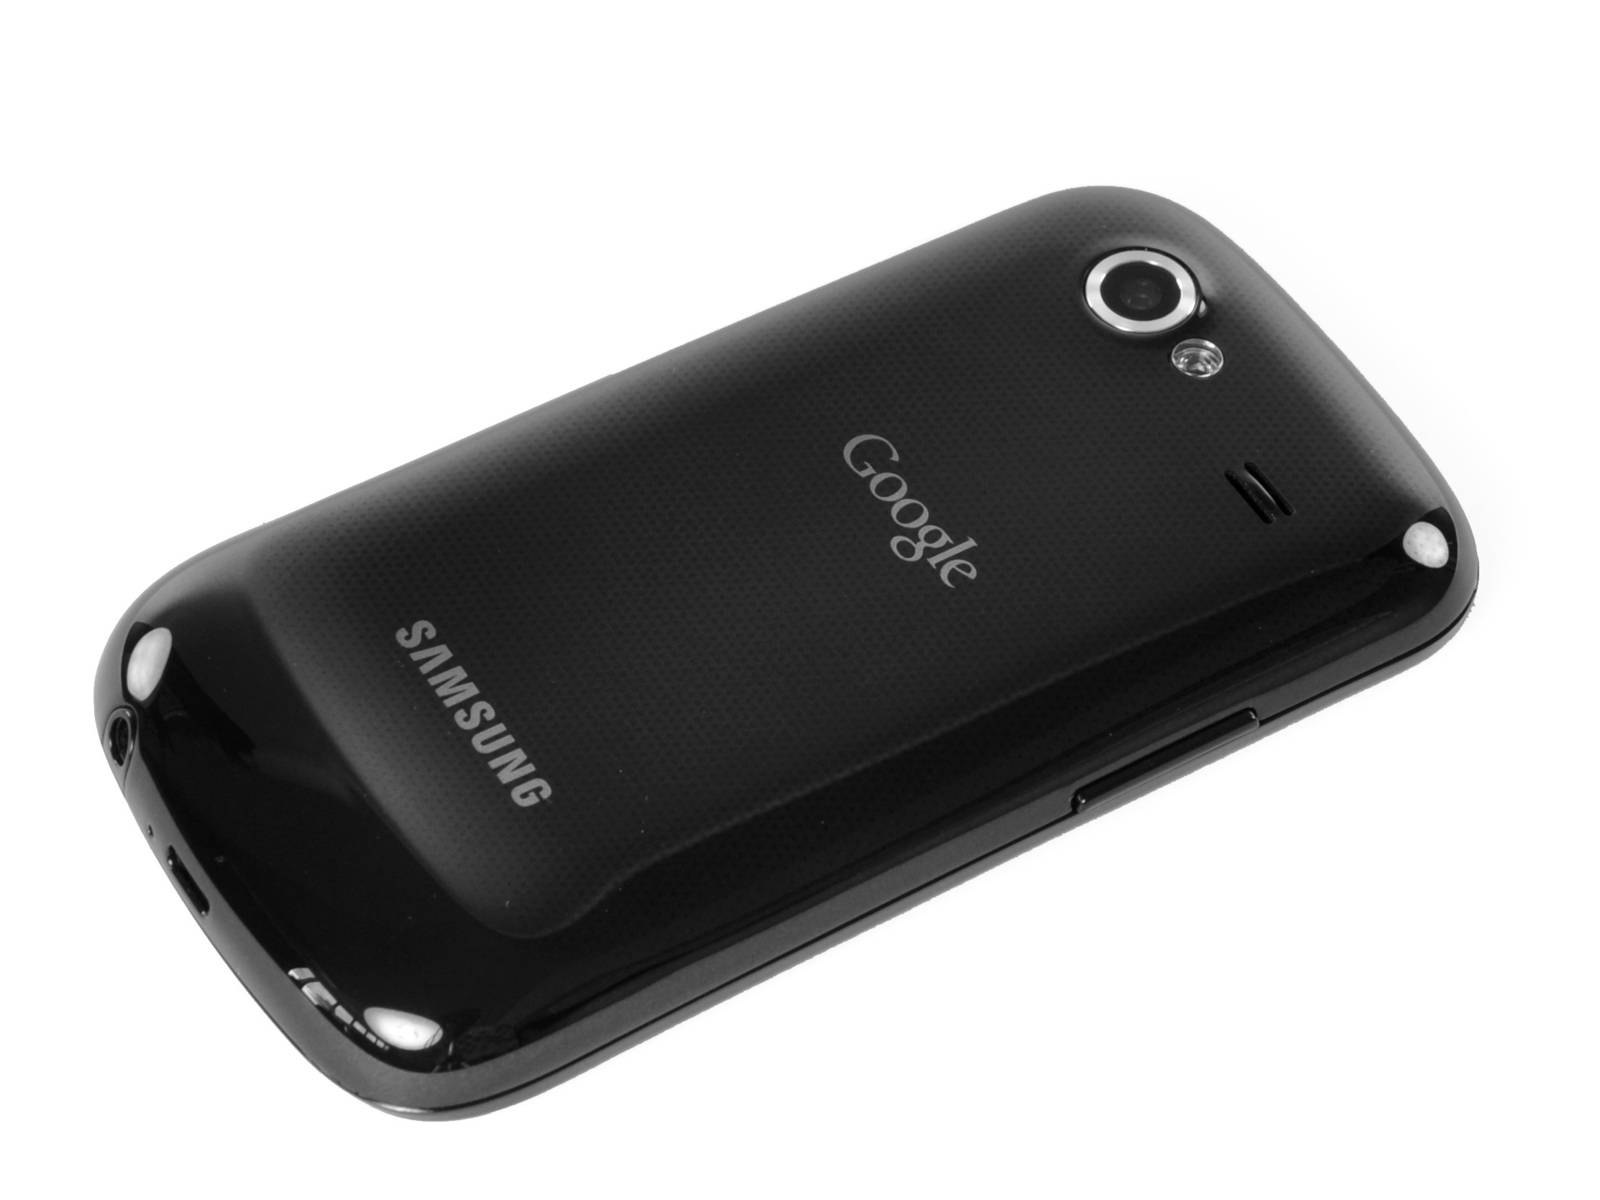 Samsung Nexus s